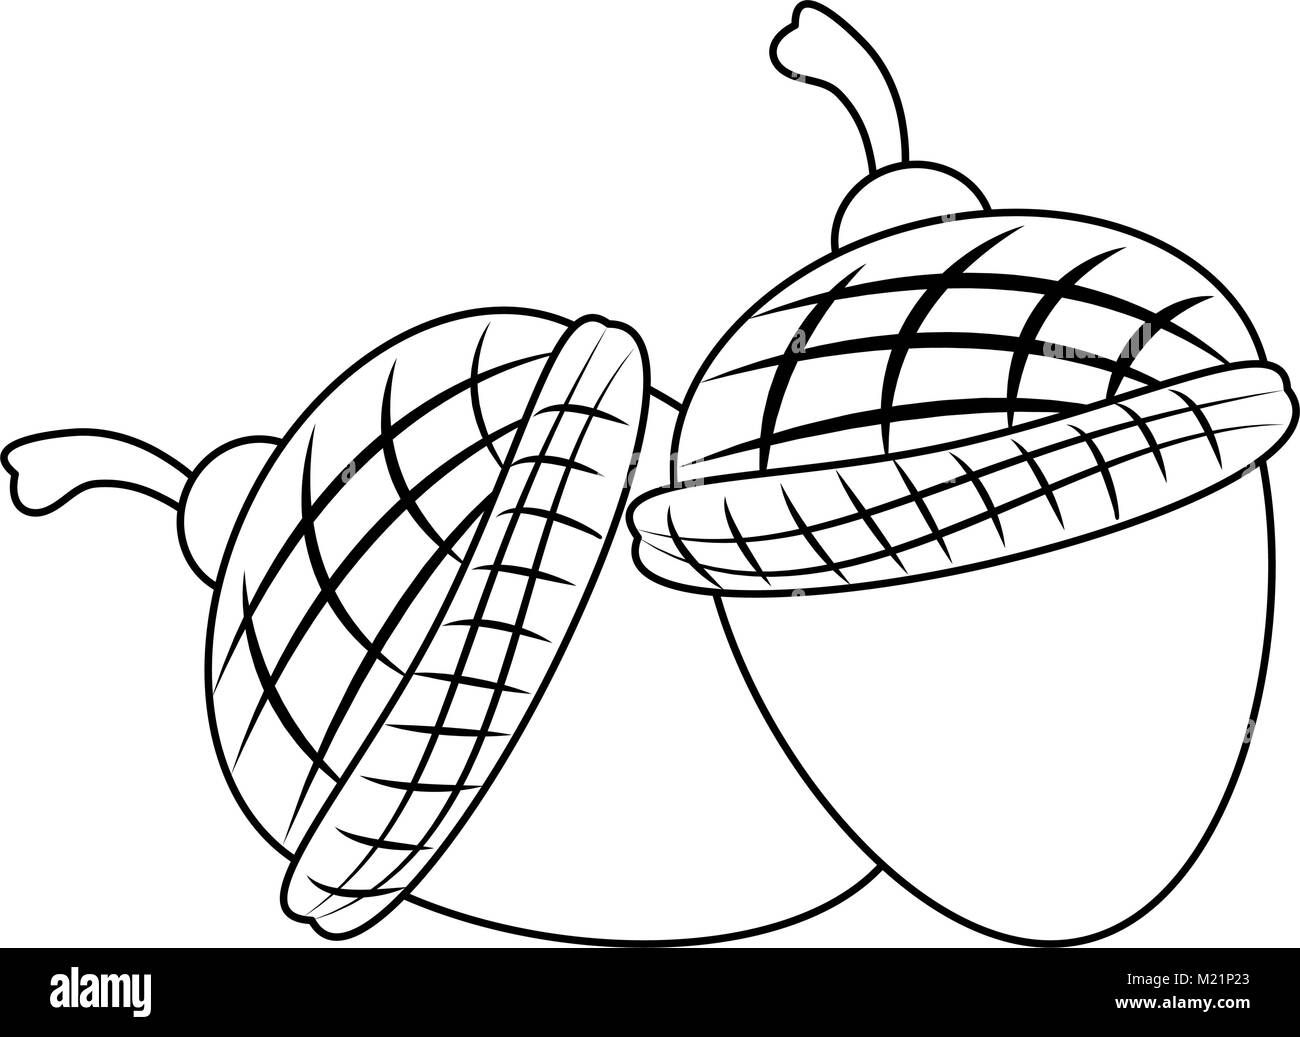 Featured image of post Nuts Cartoon Images Cartoon cartoon network fruit nut jar cartoon animated cartoon nut spider man cartoon